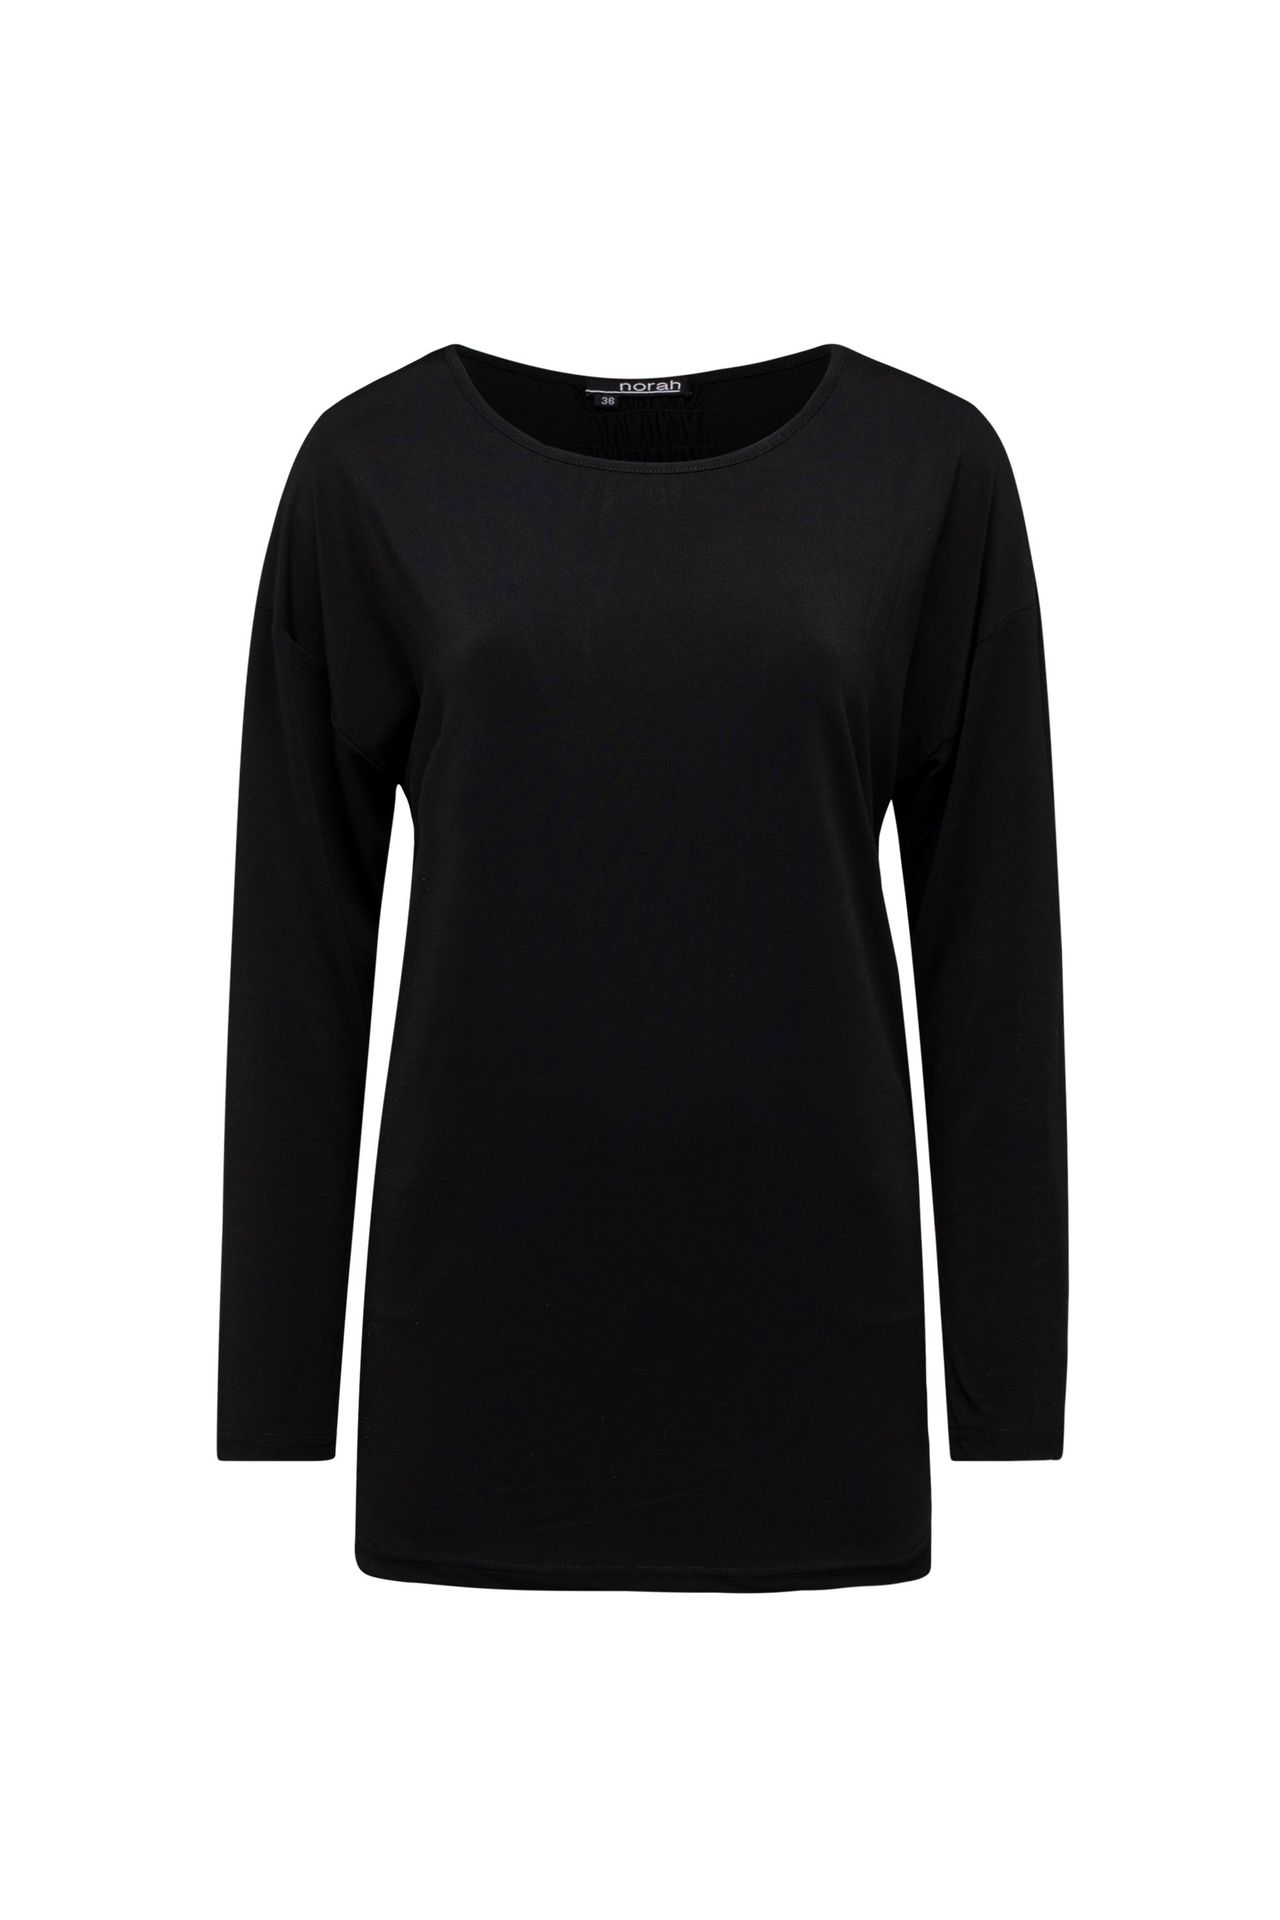 Norah Shirt zwart black 213337-001